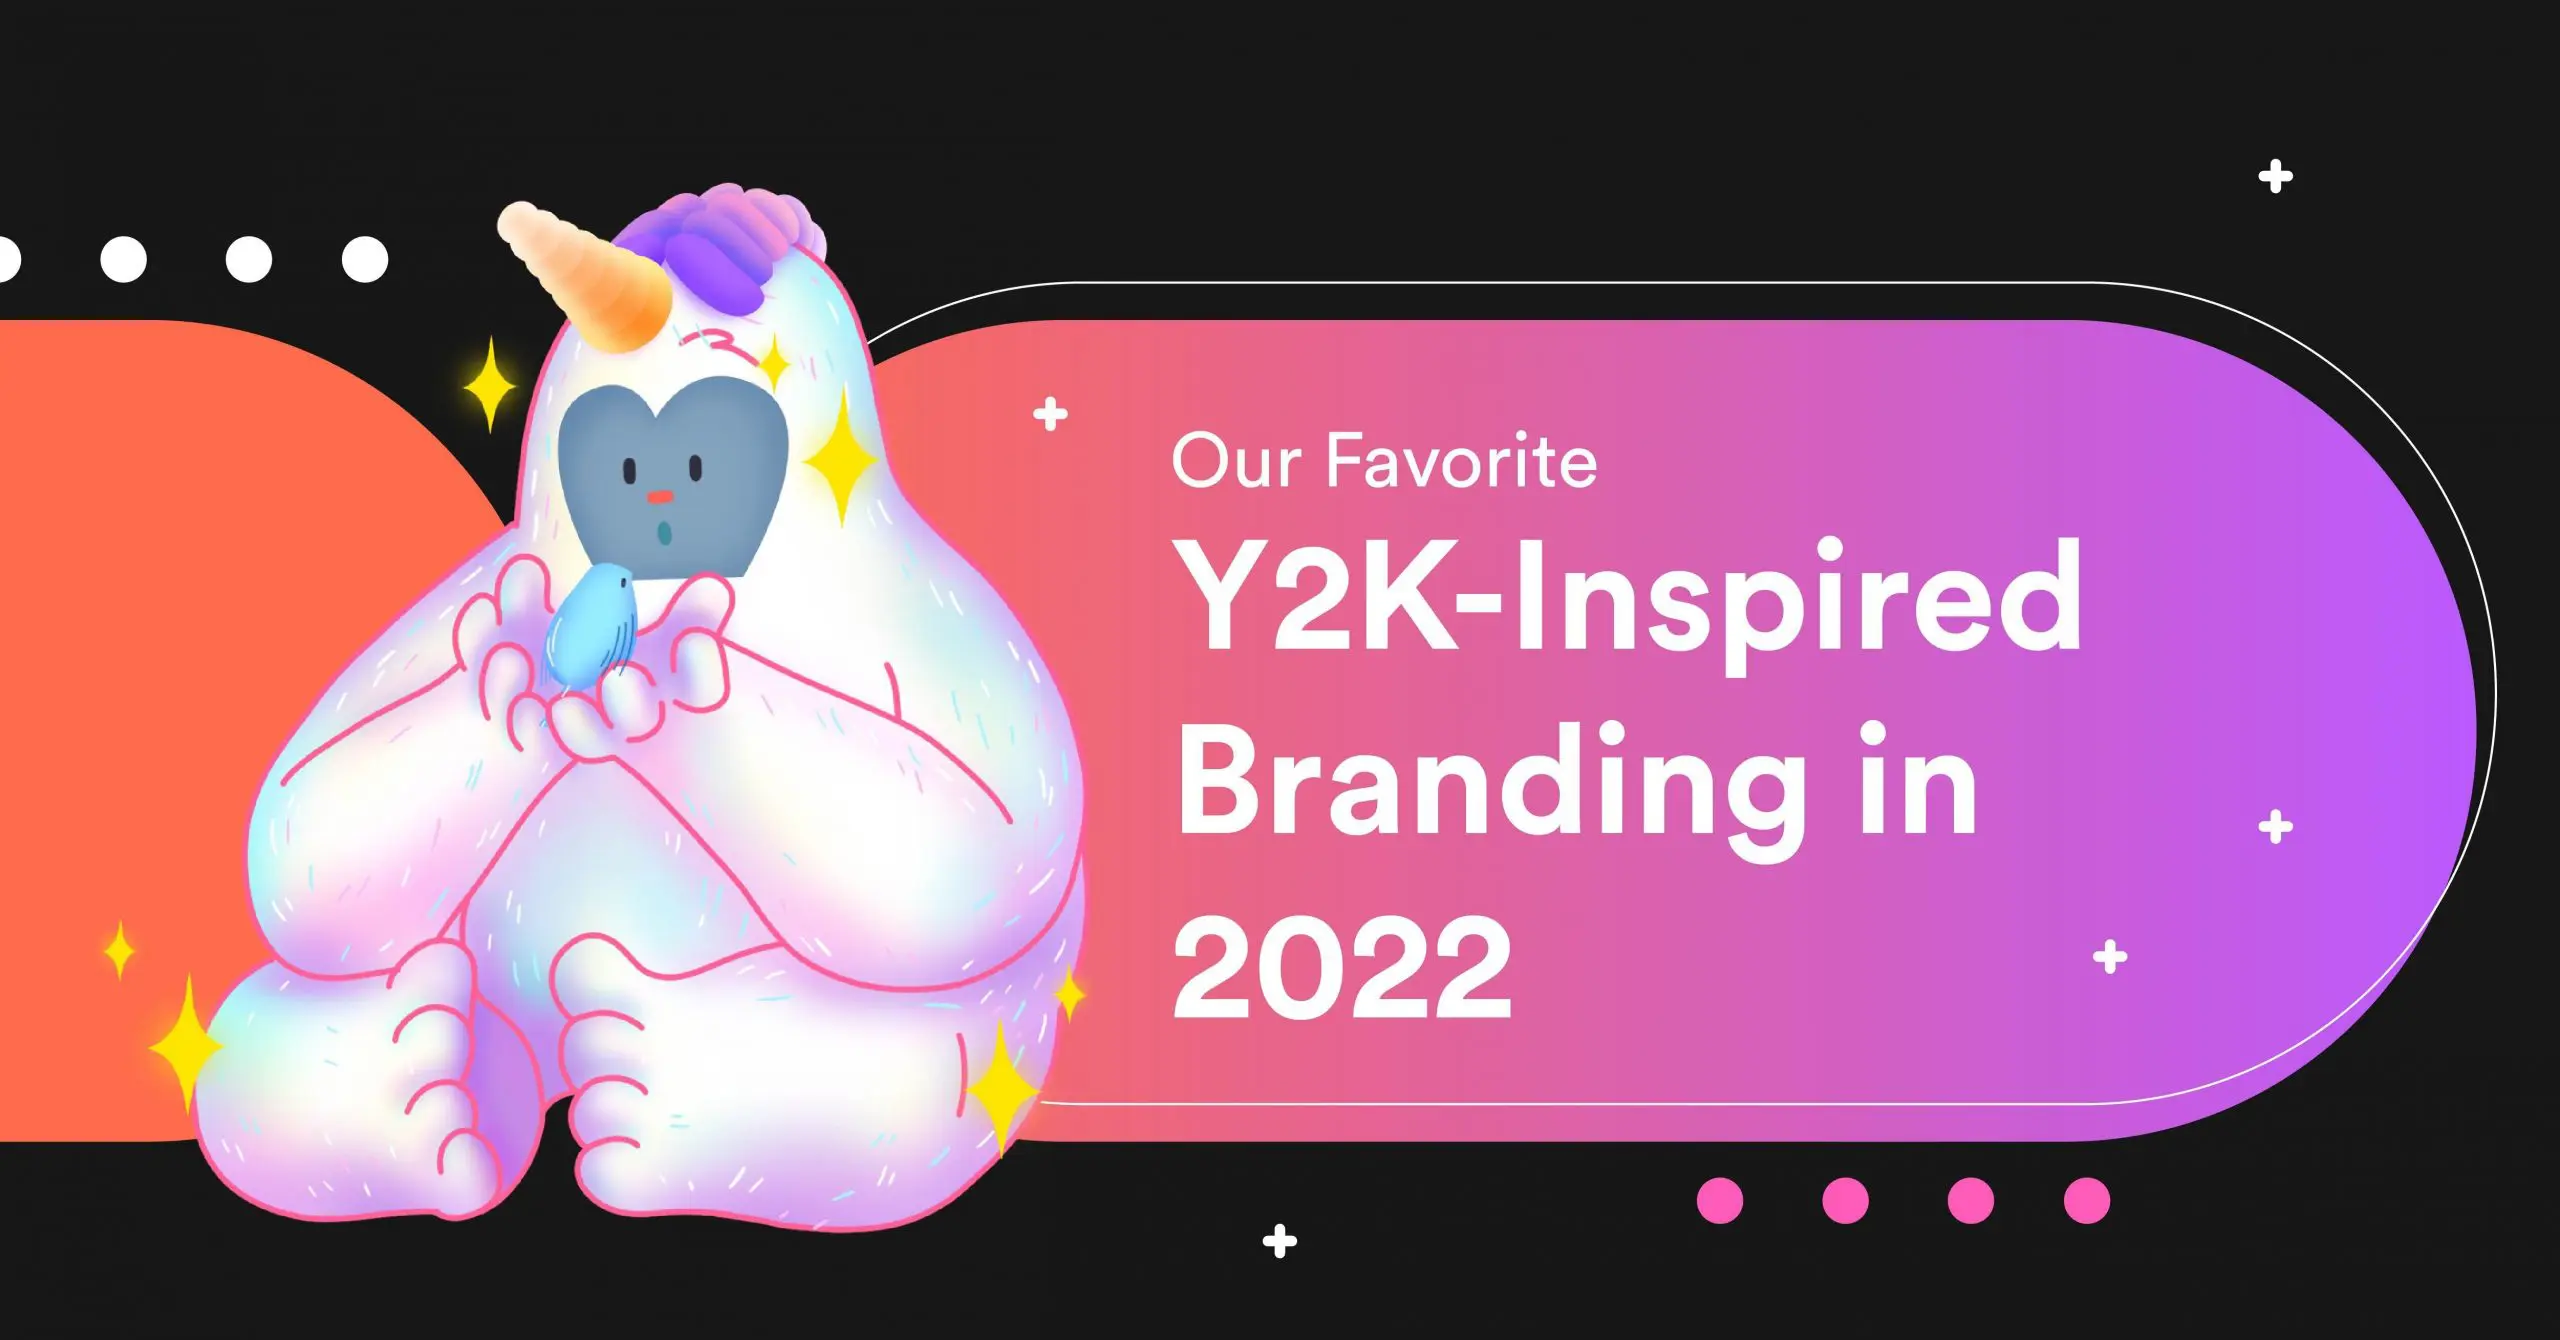 Our Favorite GenZ-Inspired Branding in 2022